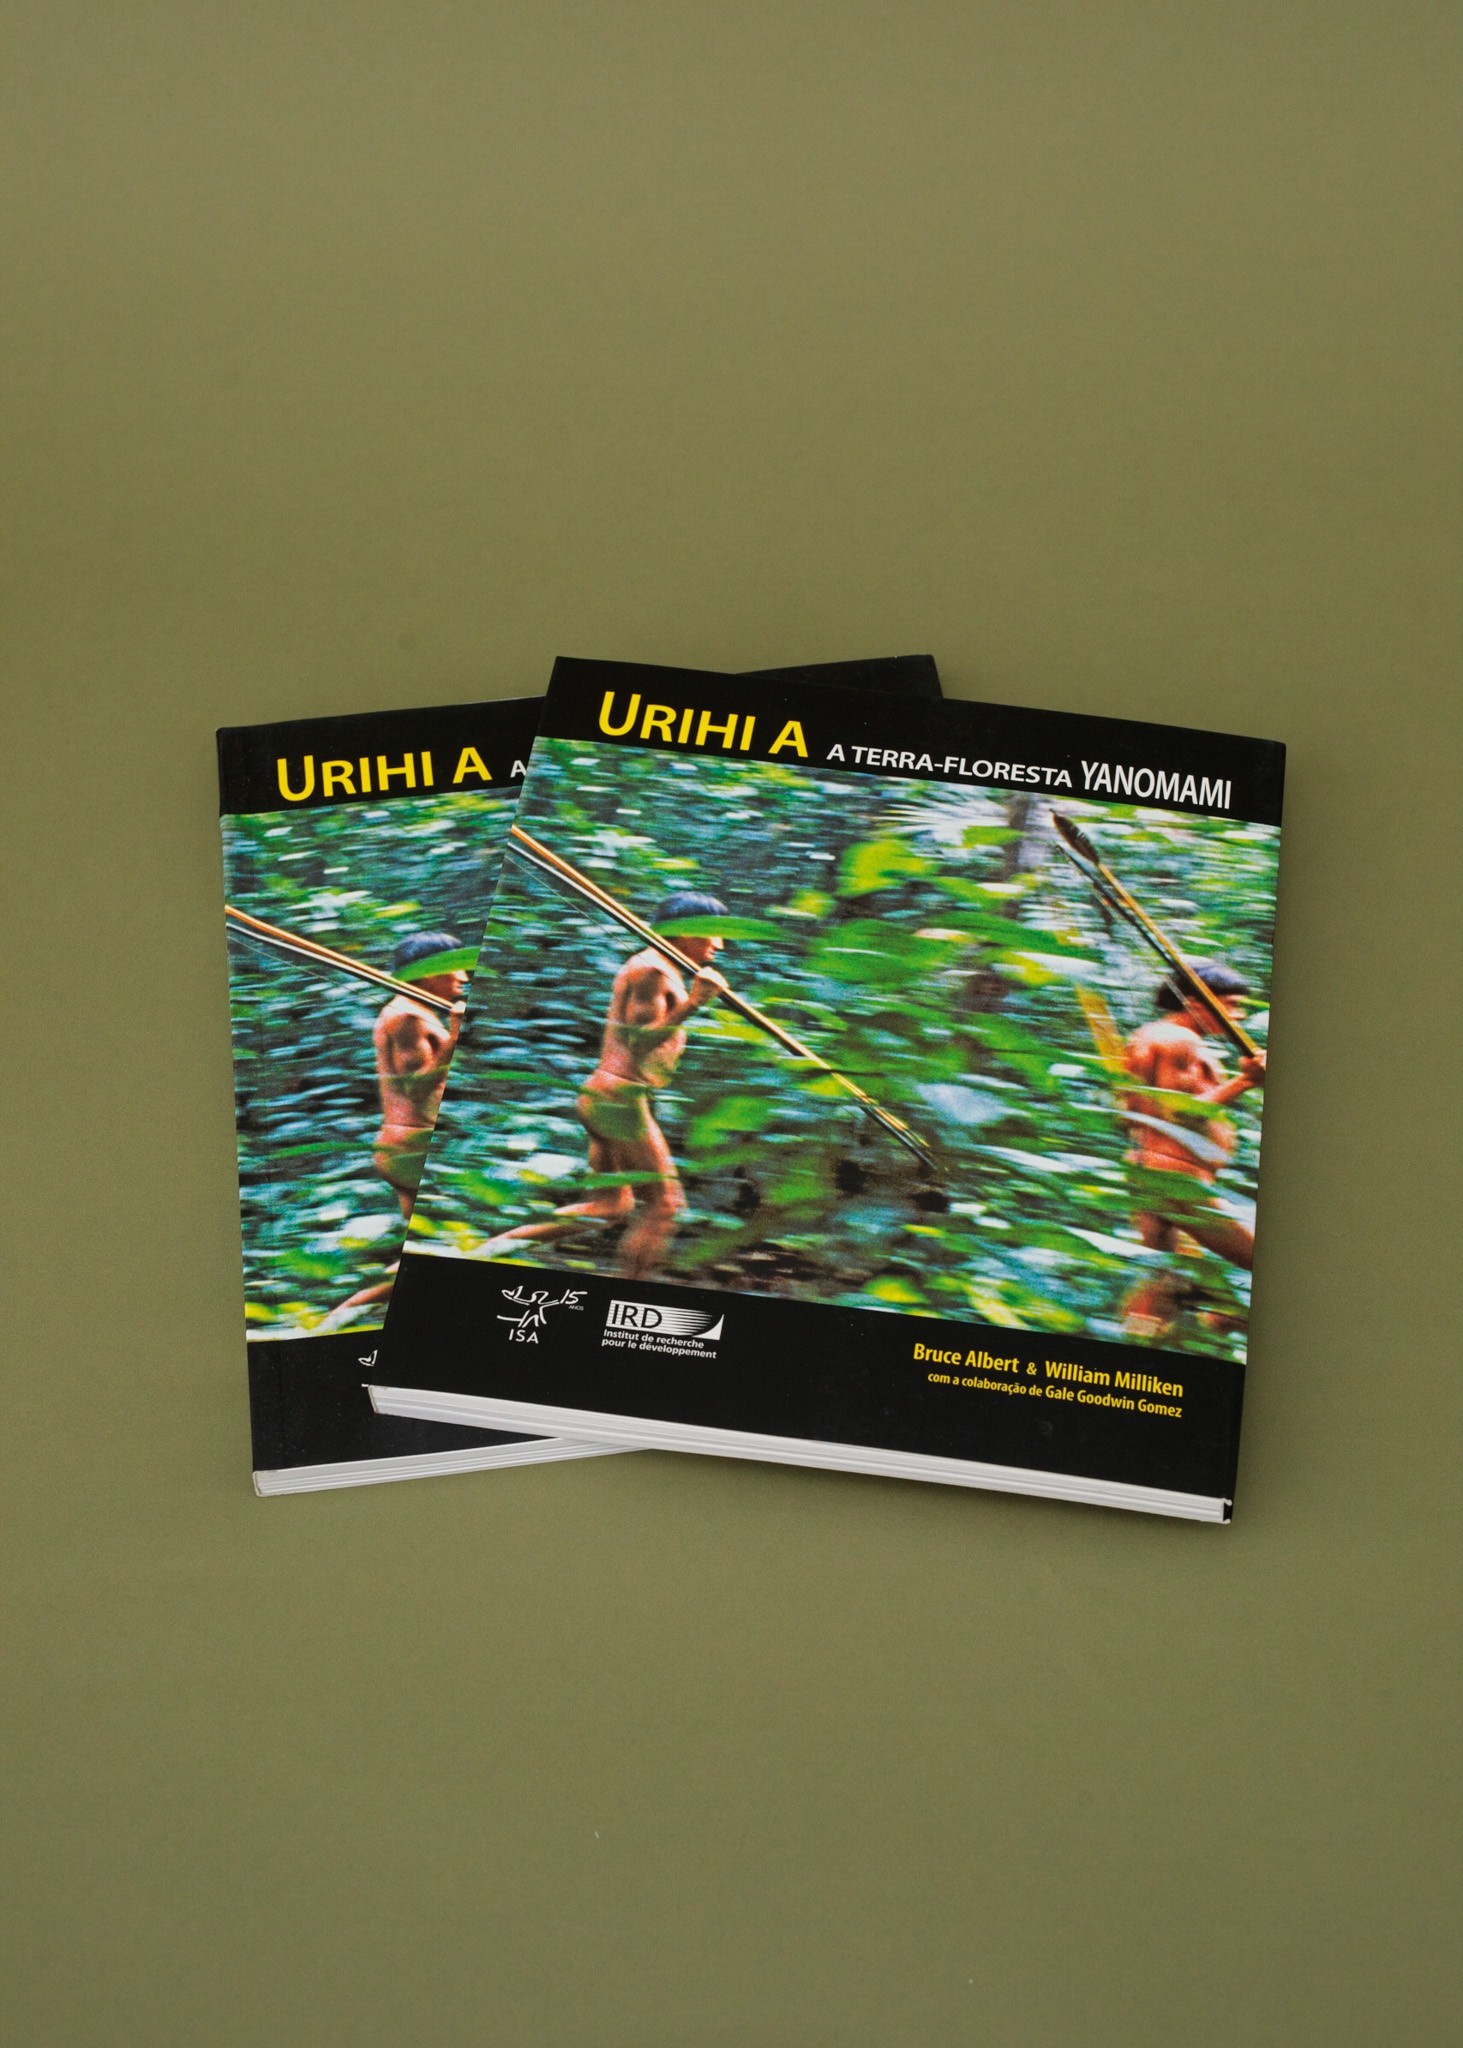 Livro Urihi a - A Terra-floresta Yanomami - Yanomami